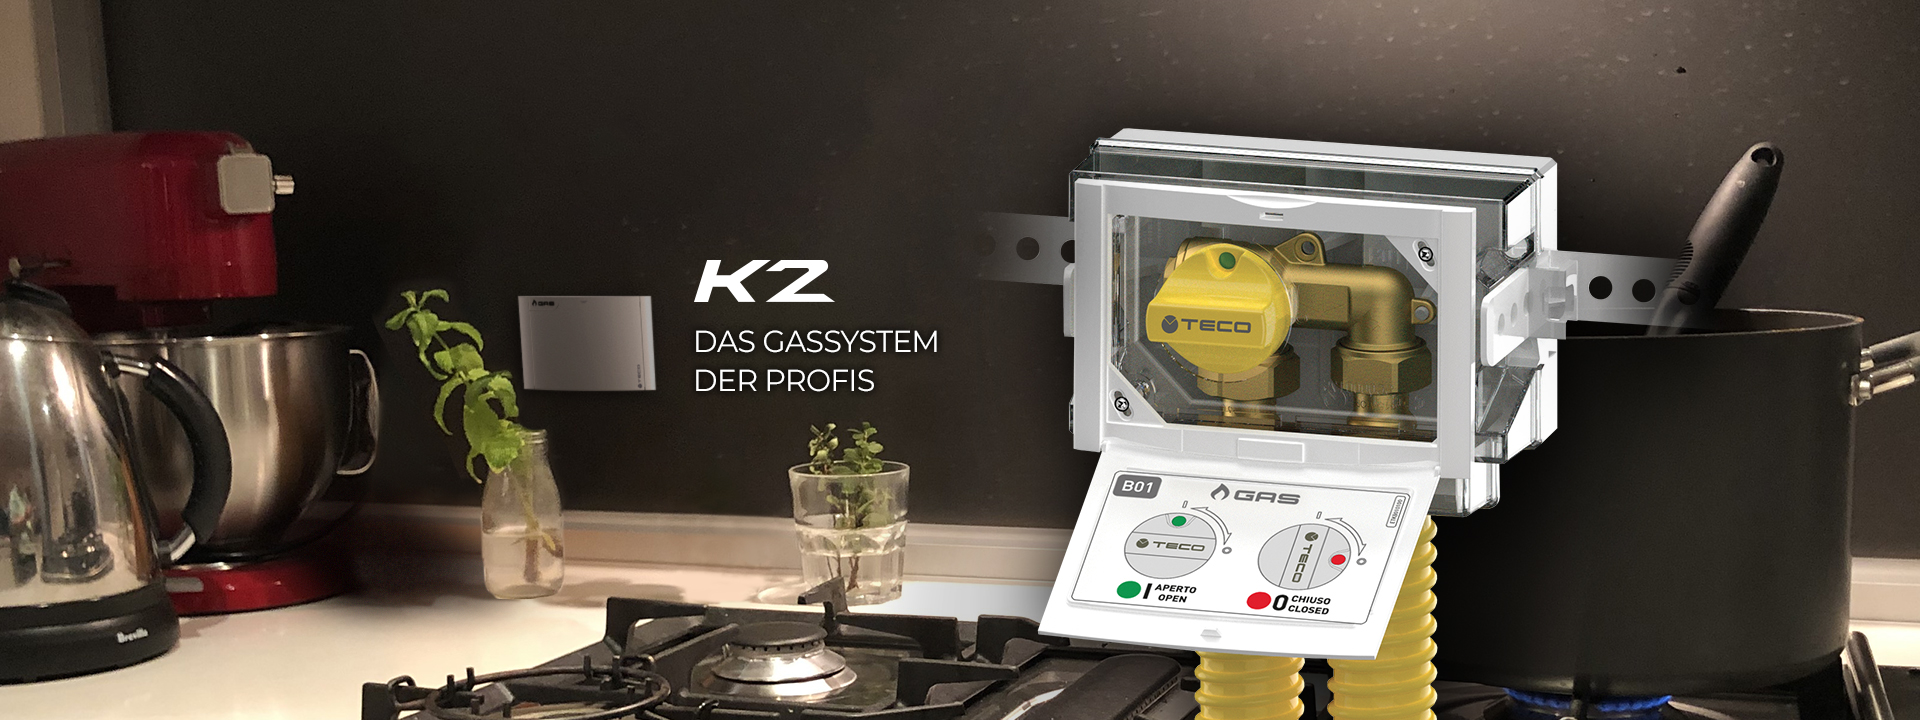 Teco K2: das gassystem der profis